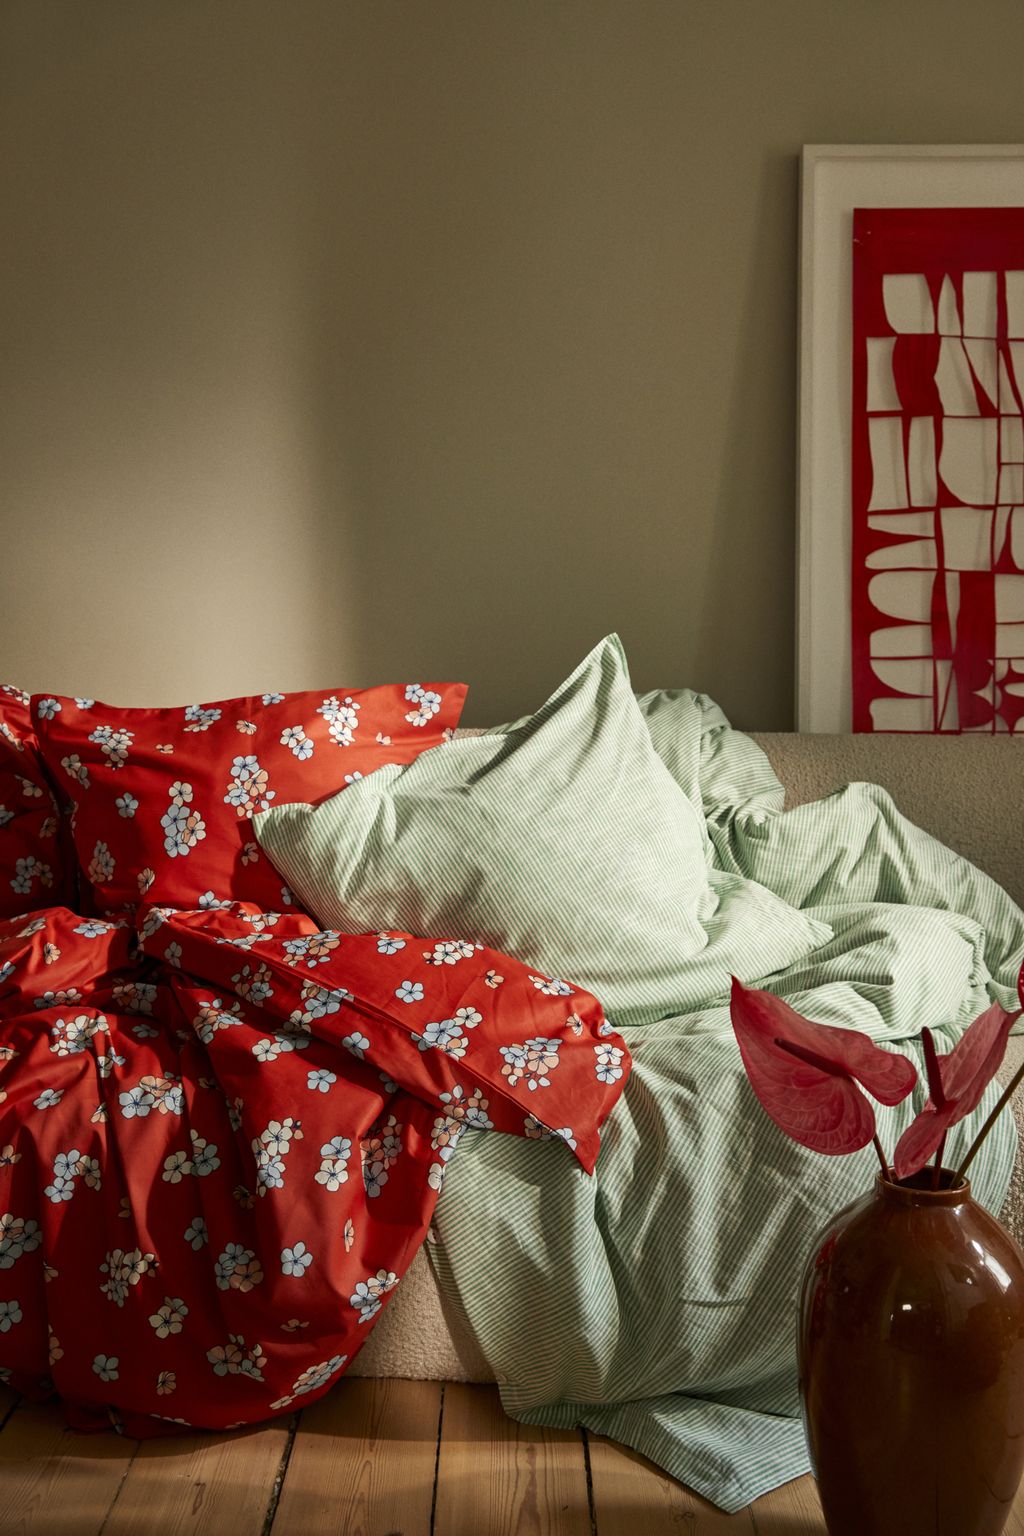 JUNA Stora behagligt sängkläder 140x200 cm, chili